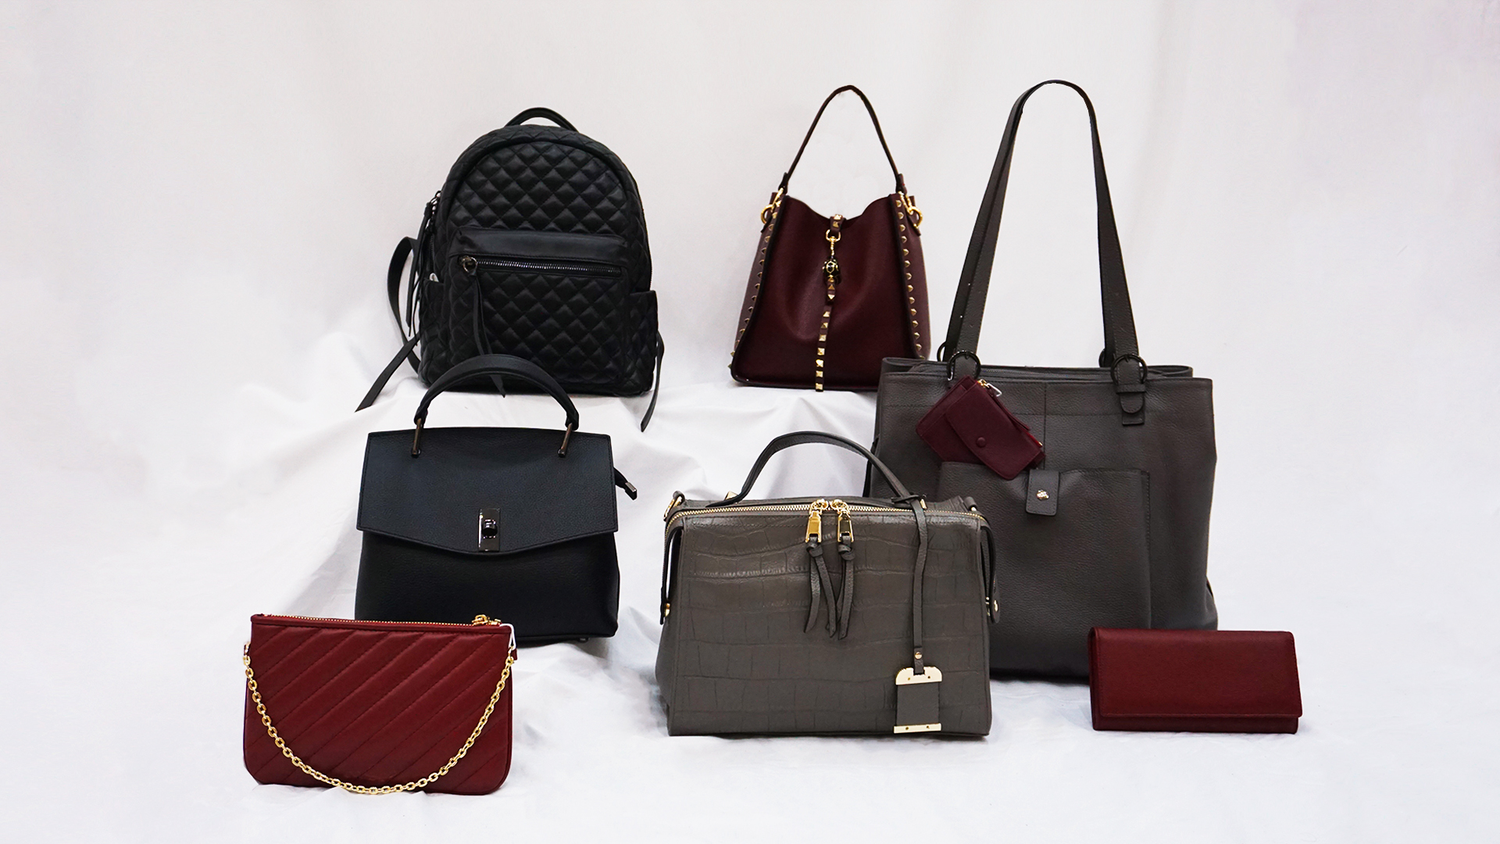 TOMORROW CLOSET (Singapore) Women's leather handbags